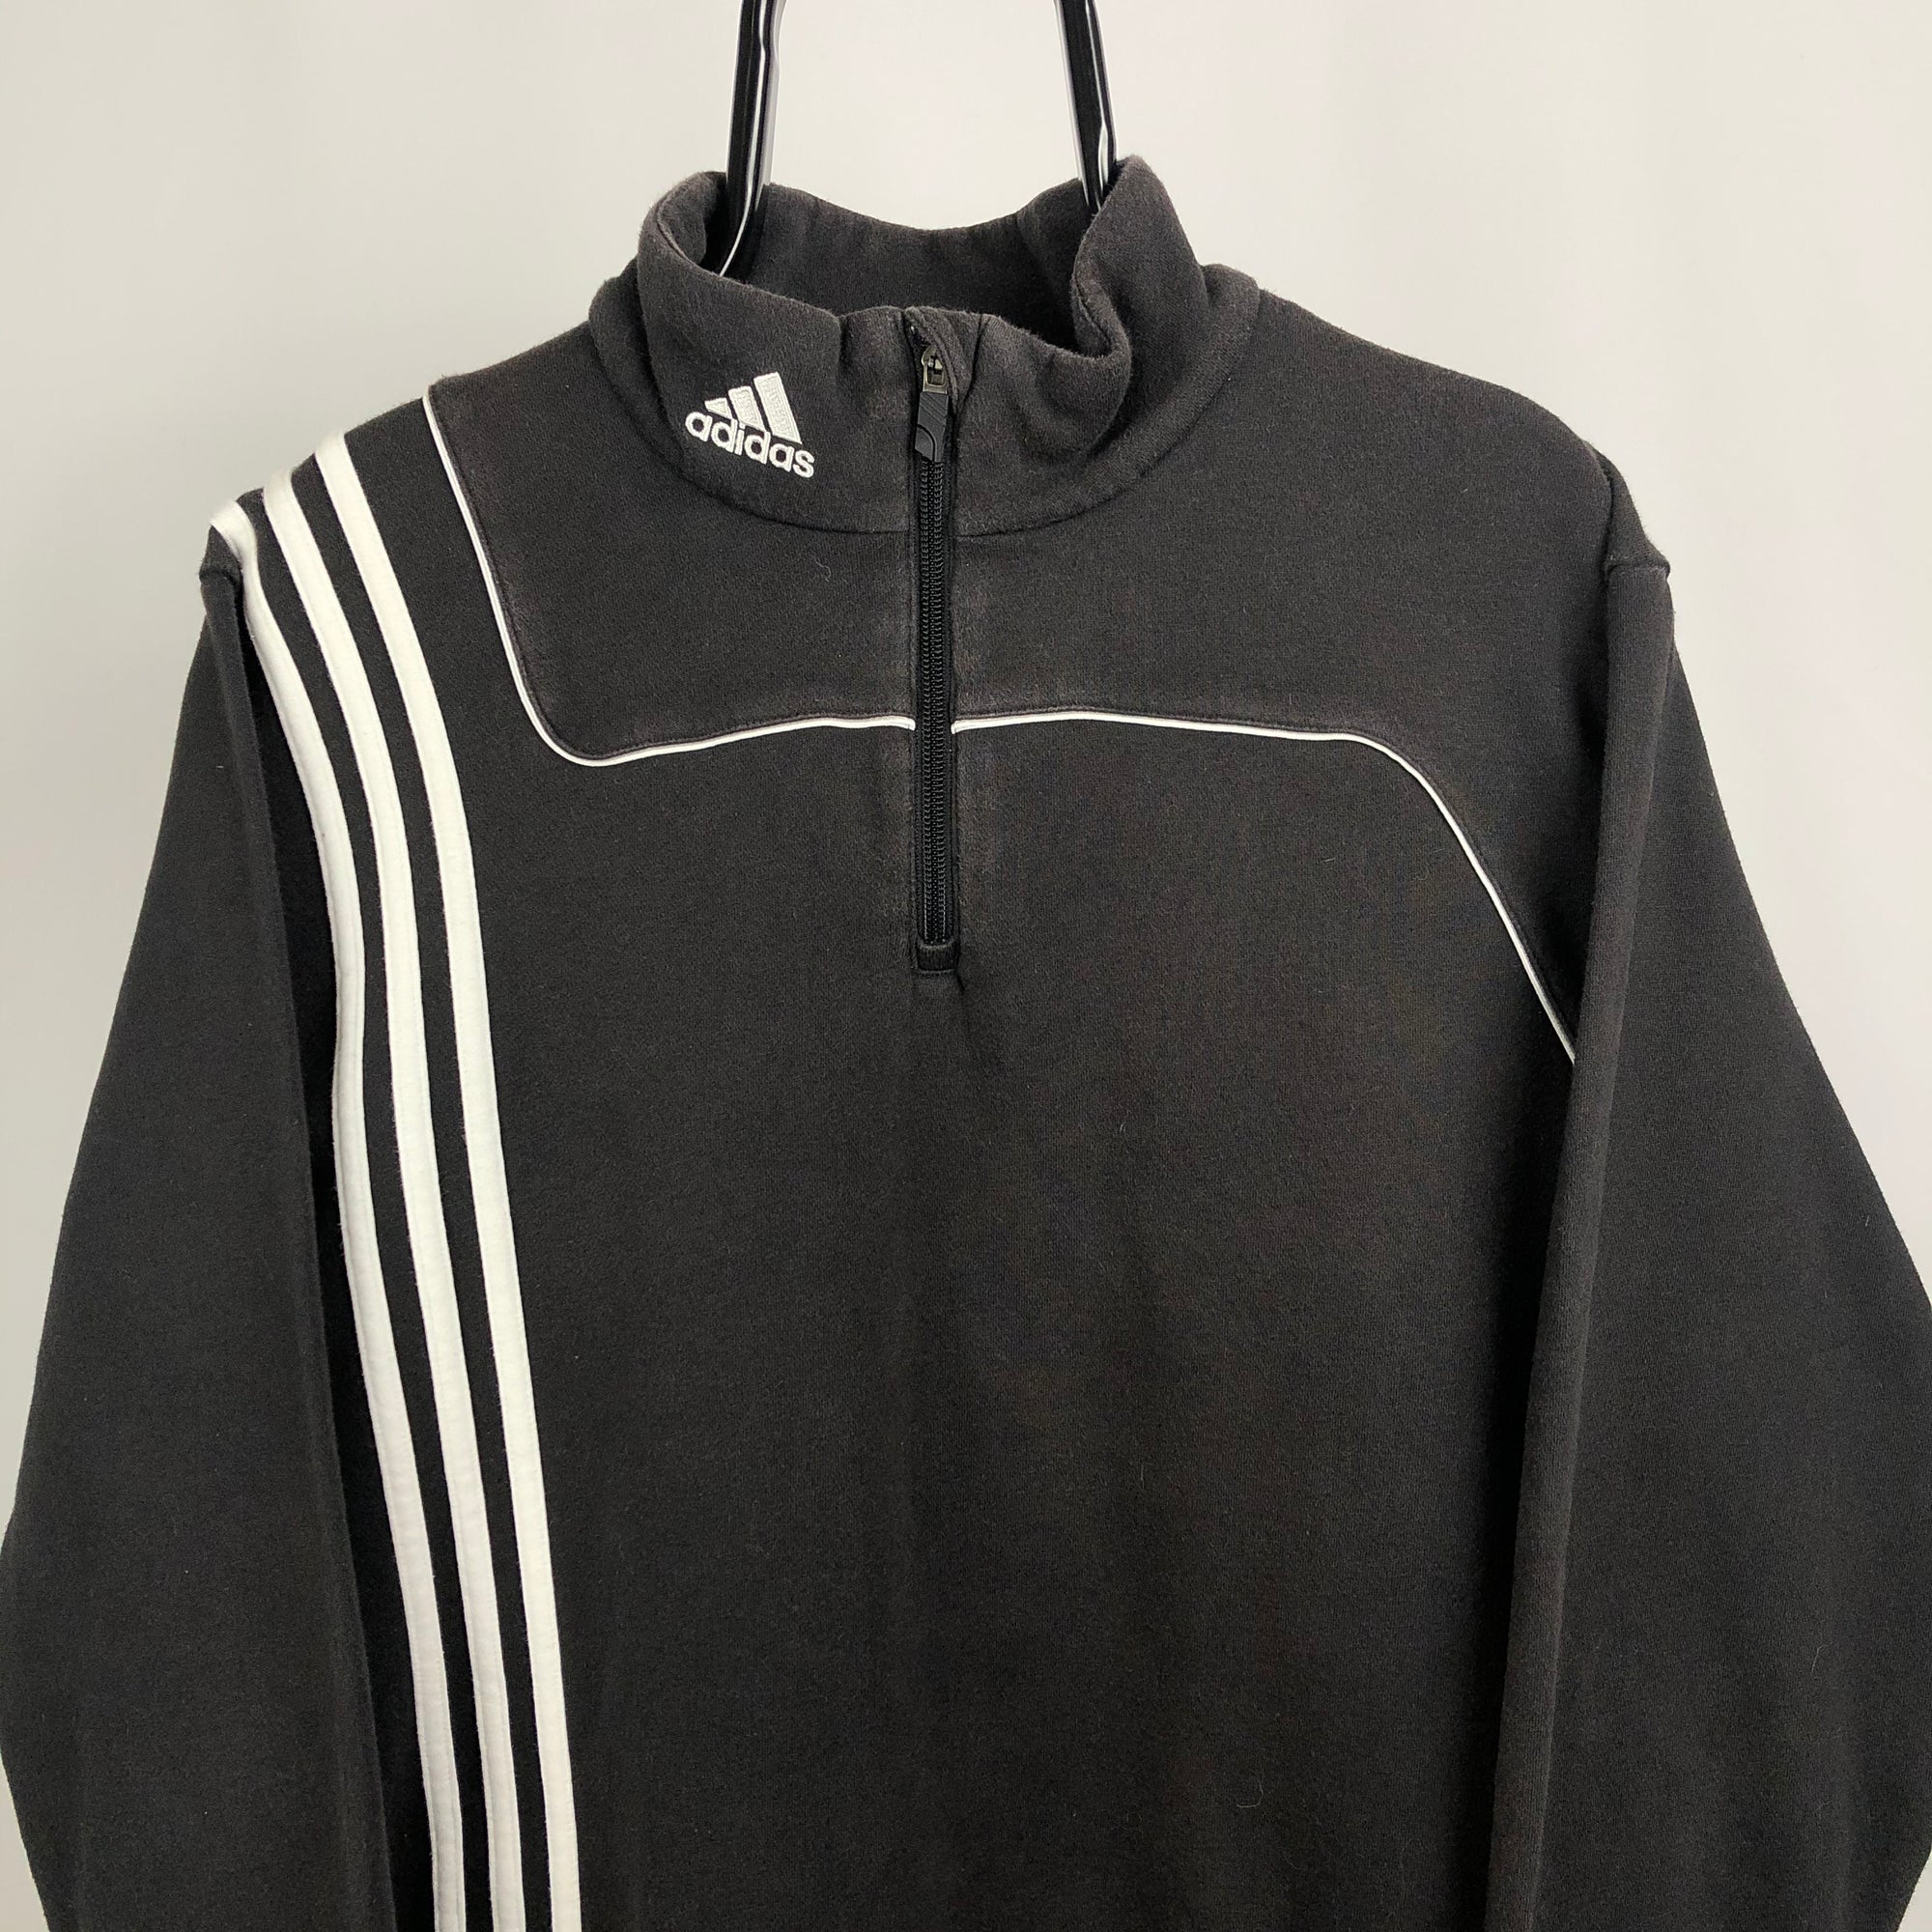 Vintage Adidas 1/4 Zip Sweatshirt in Black/White - Men's Large/Women's XL